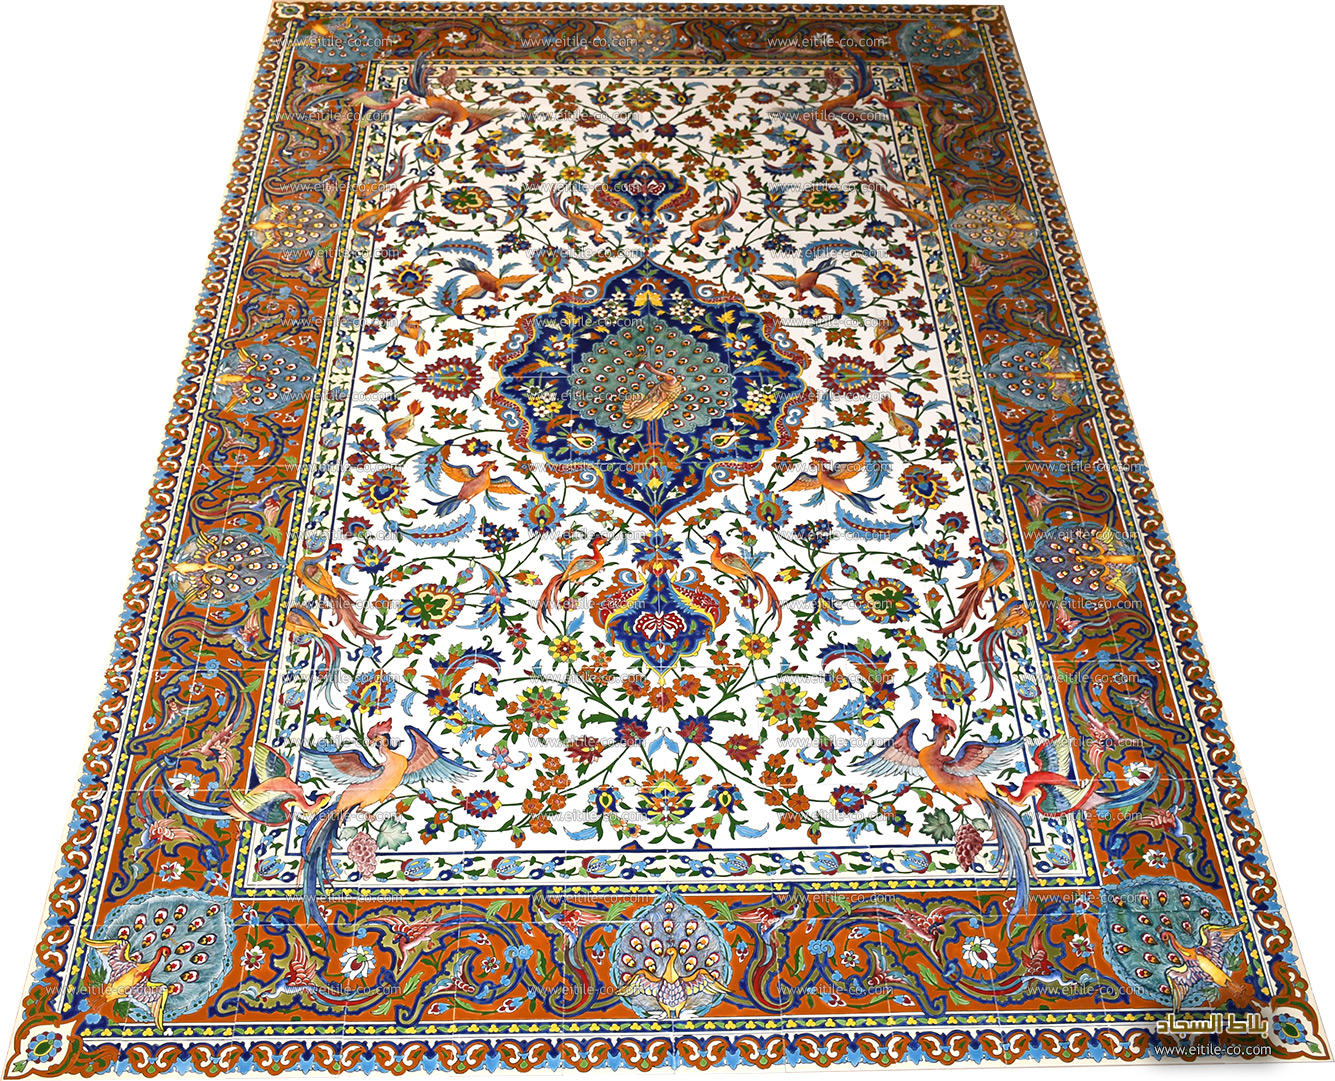 Supplier of handmade floor ceramic with carpet design, www.eitile-co.com